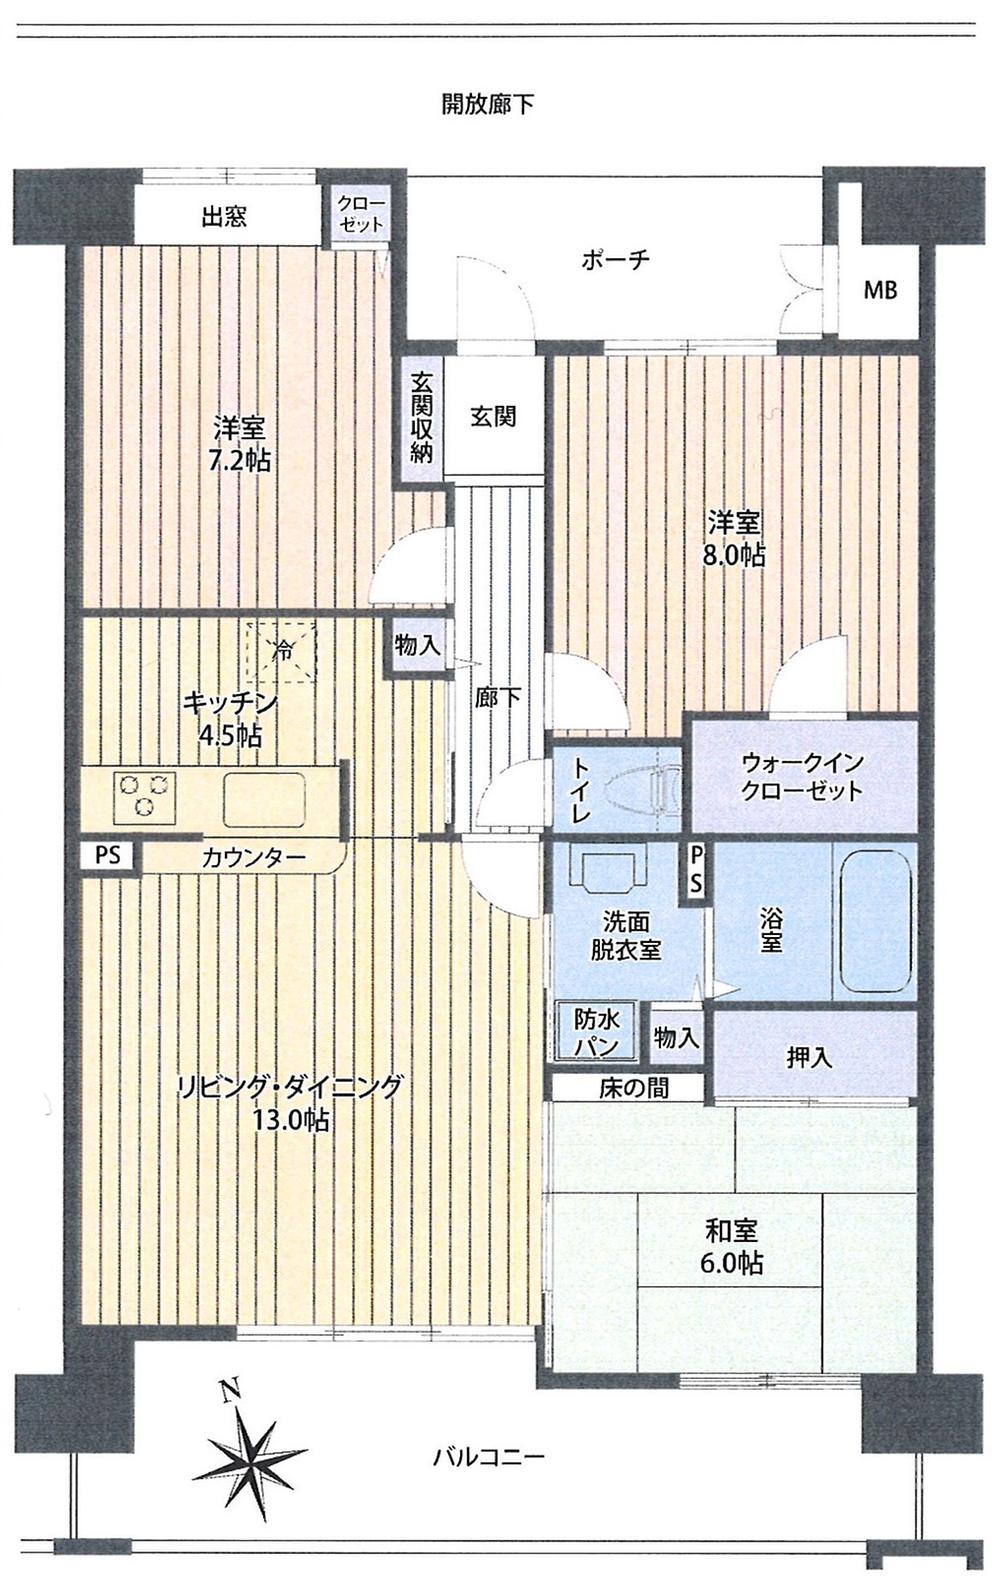 Floor plan. 3LDK, Price 18.9 million yen, Occupied area 81.97 sq m , Balcony area 14.35 sq m